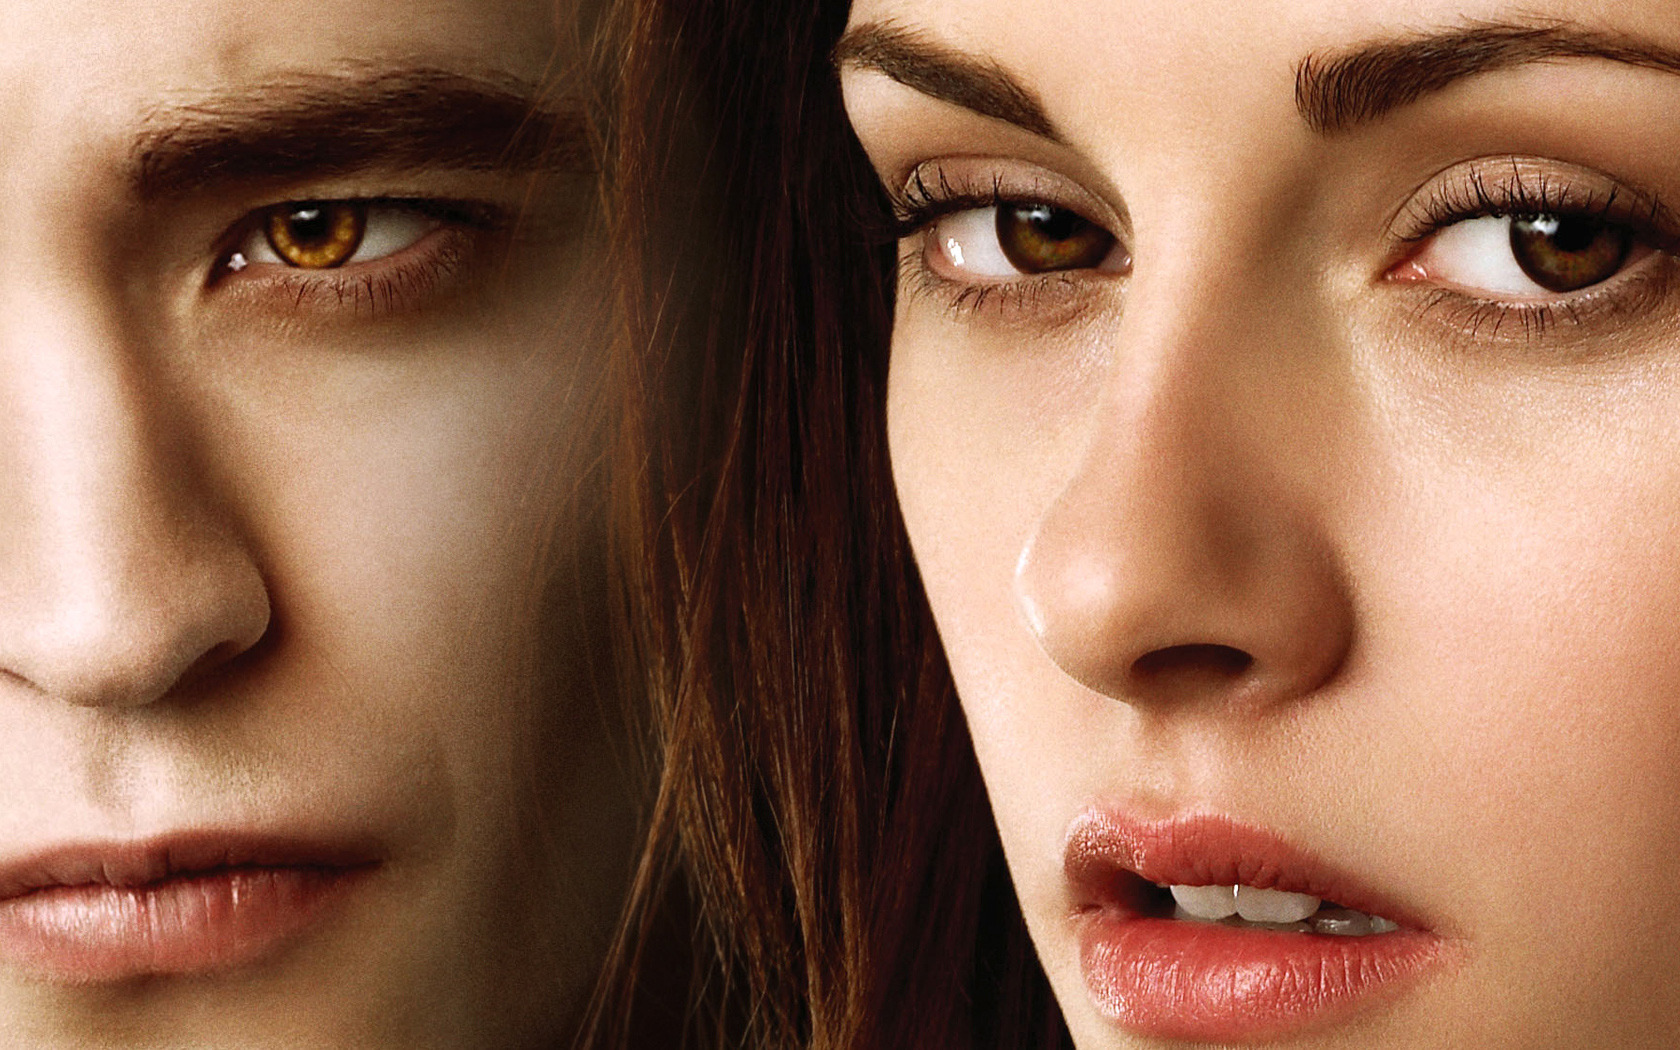 Robert Pattinson and Kristen Stewart in a romantic scene as Edward Cullen and Bella Swan